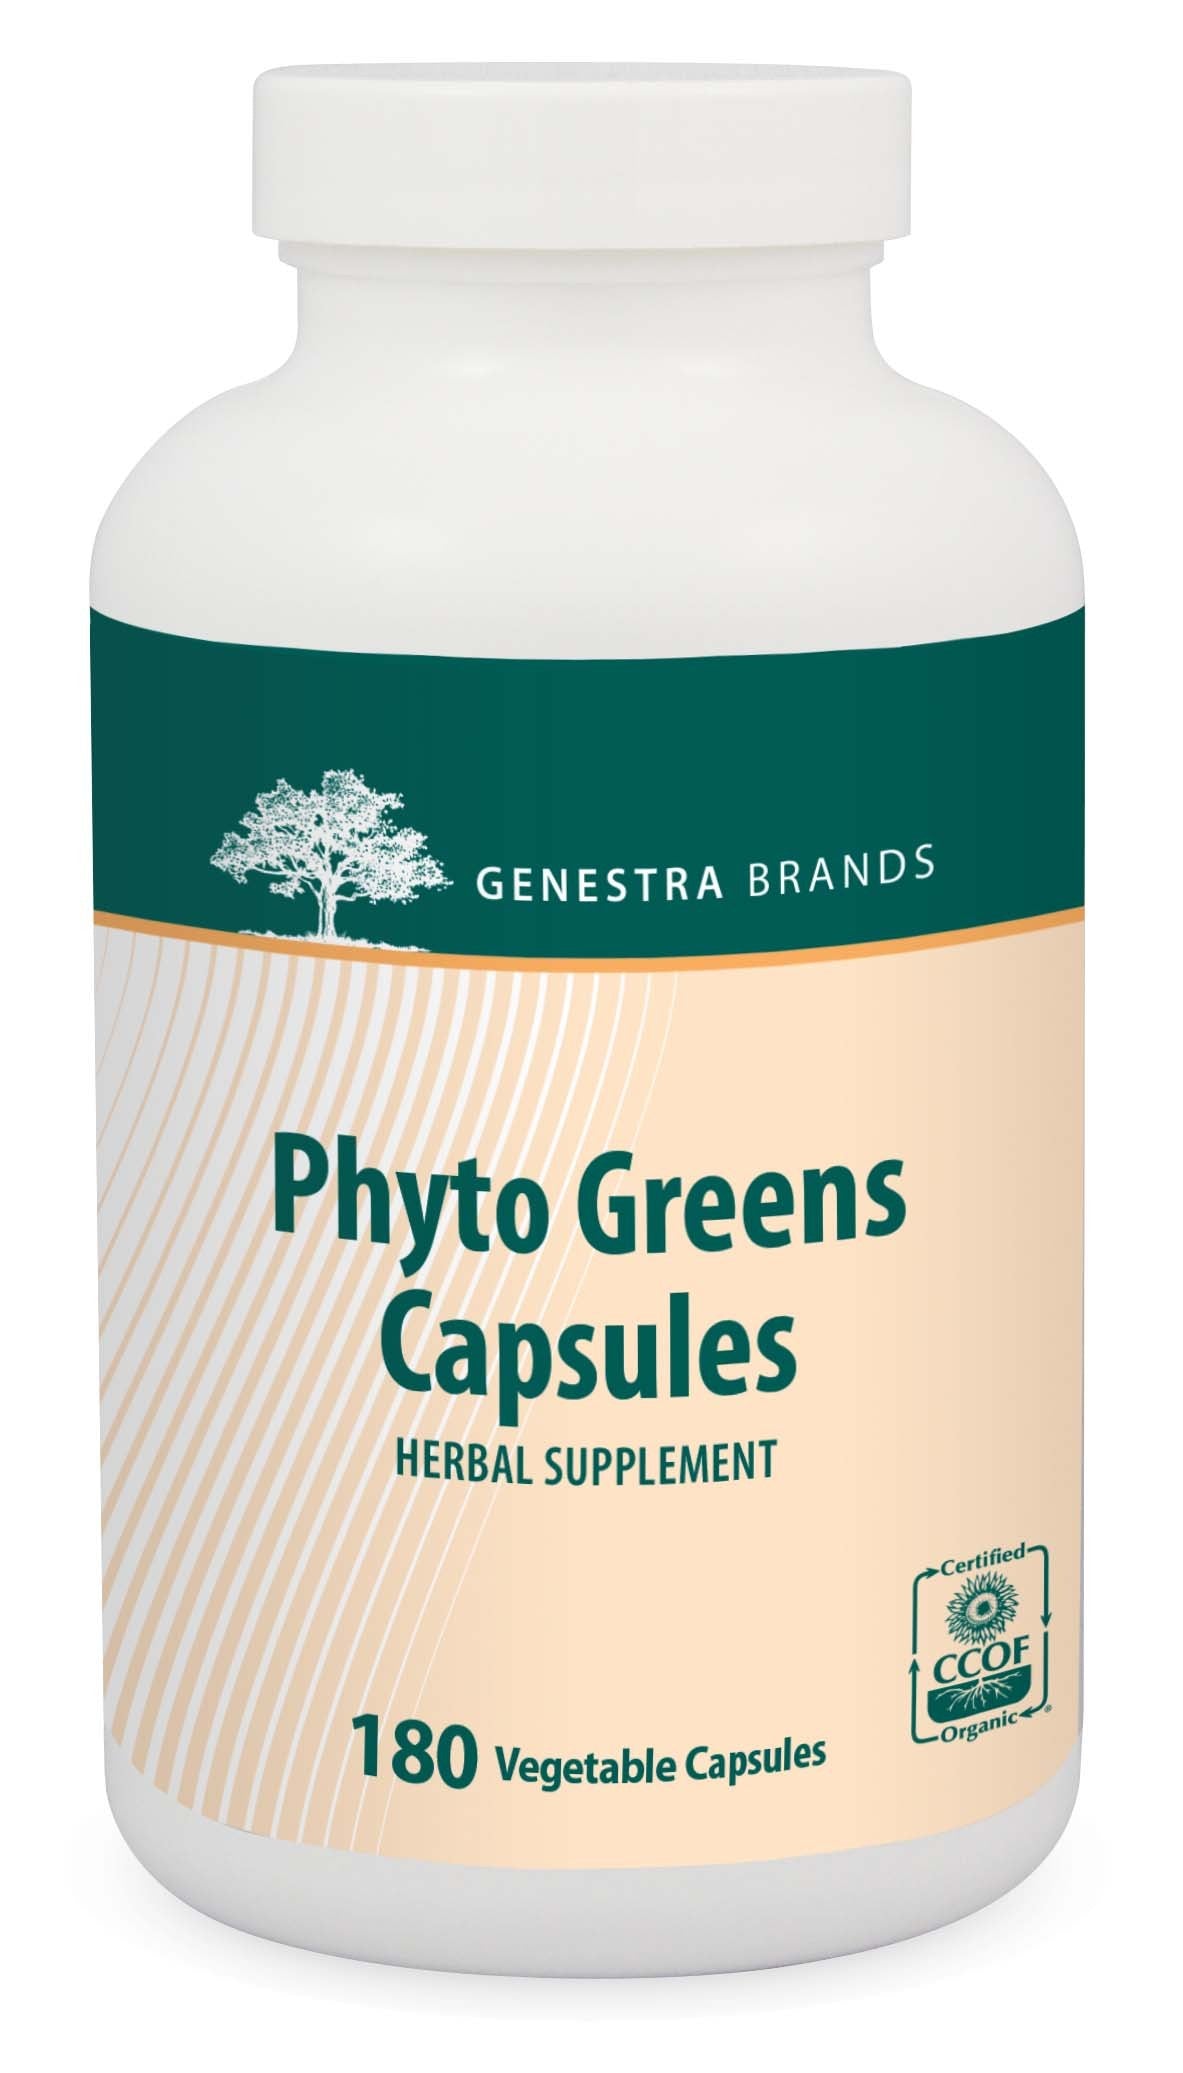 Phyto Greens - Genestra